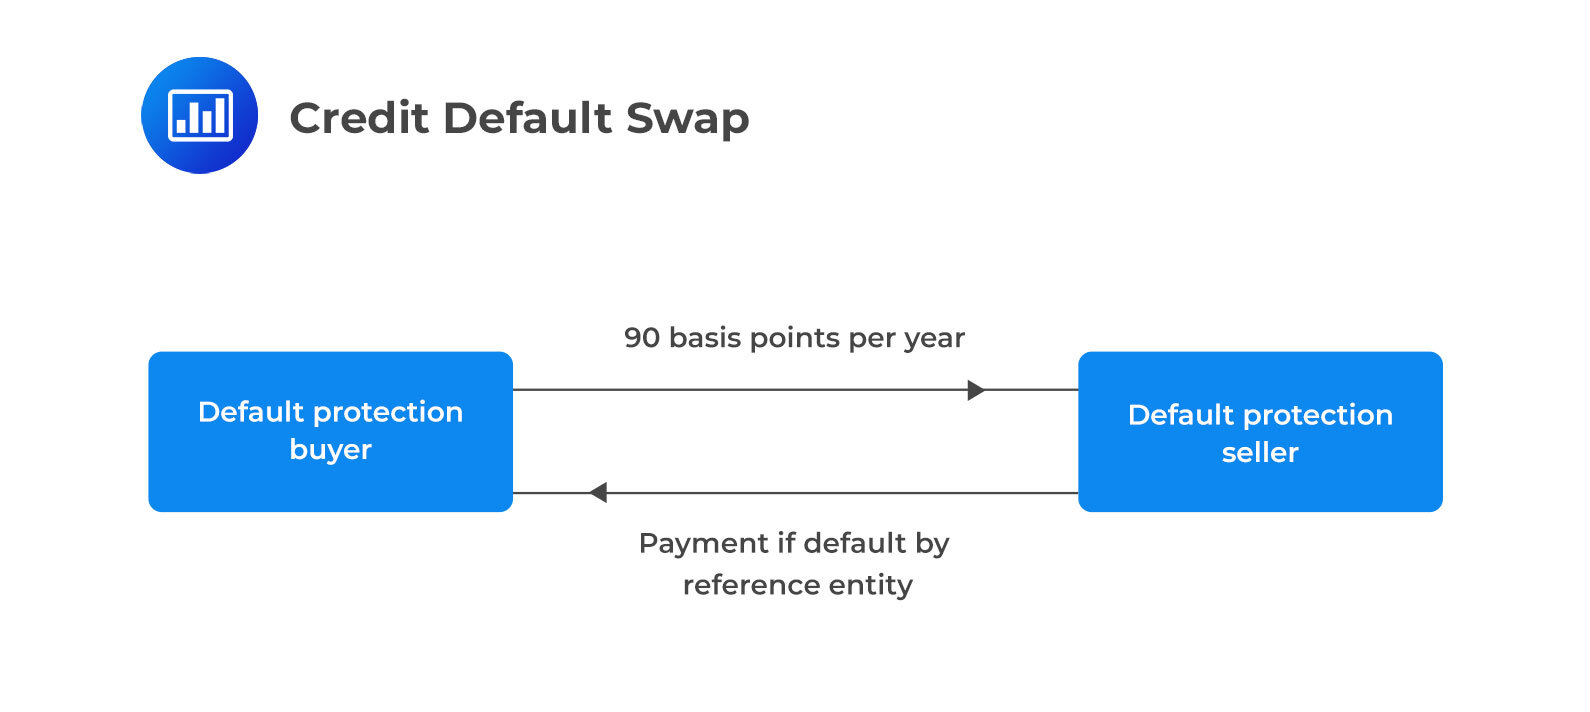 Credit default swap